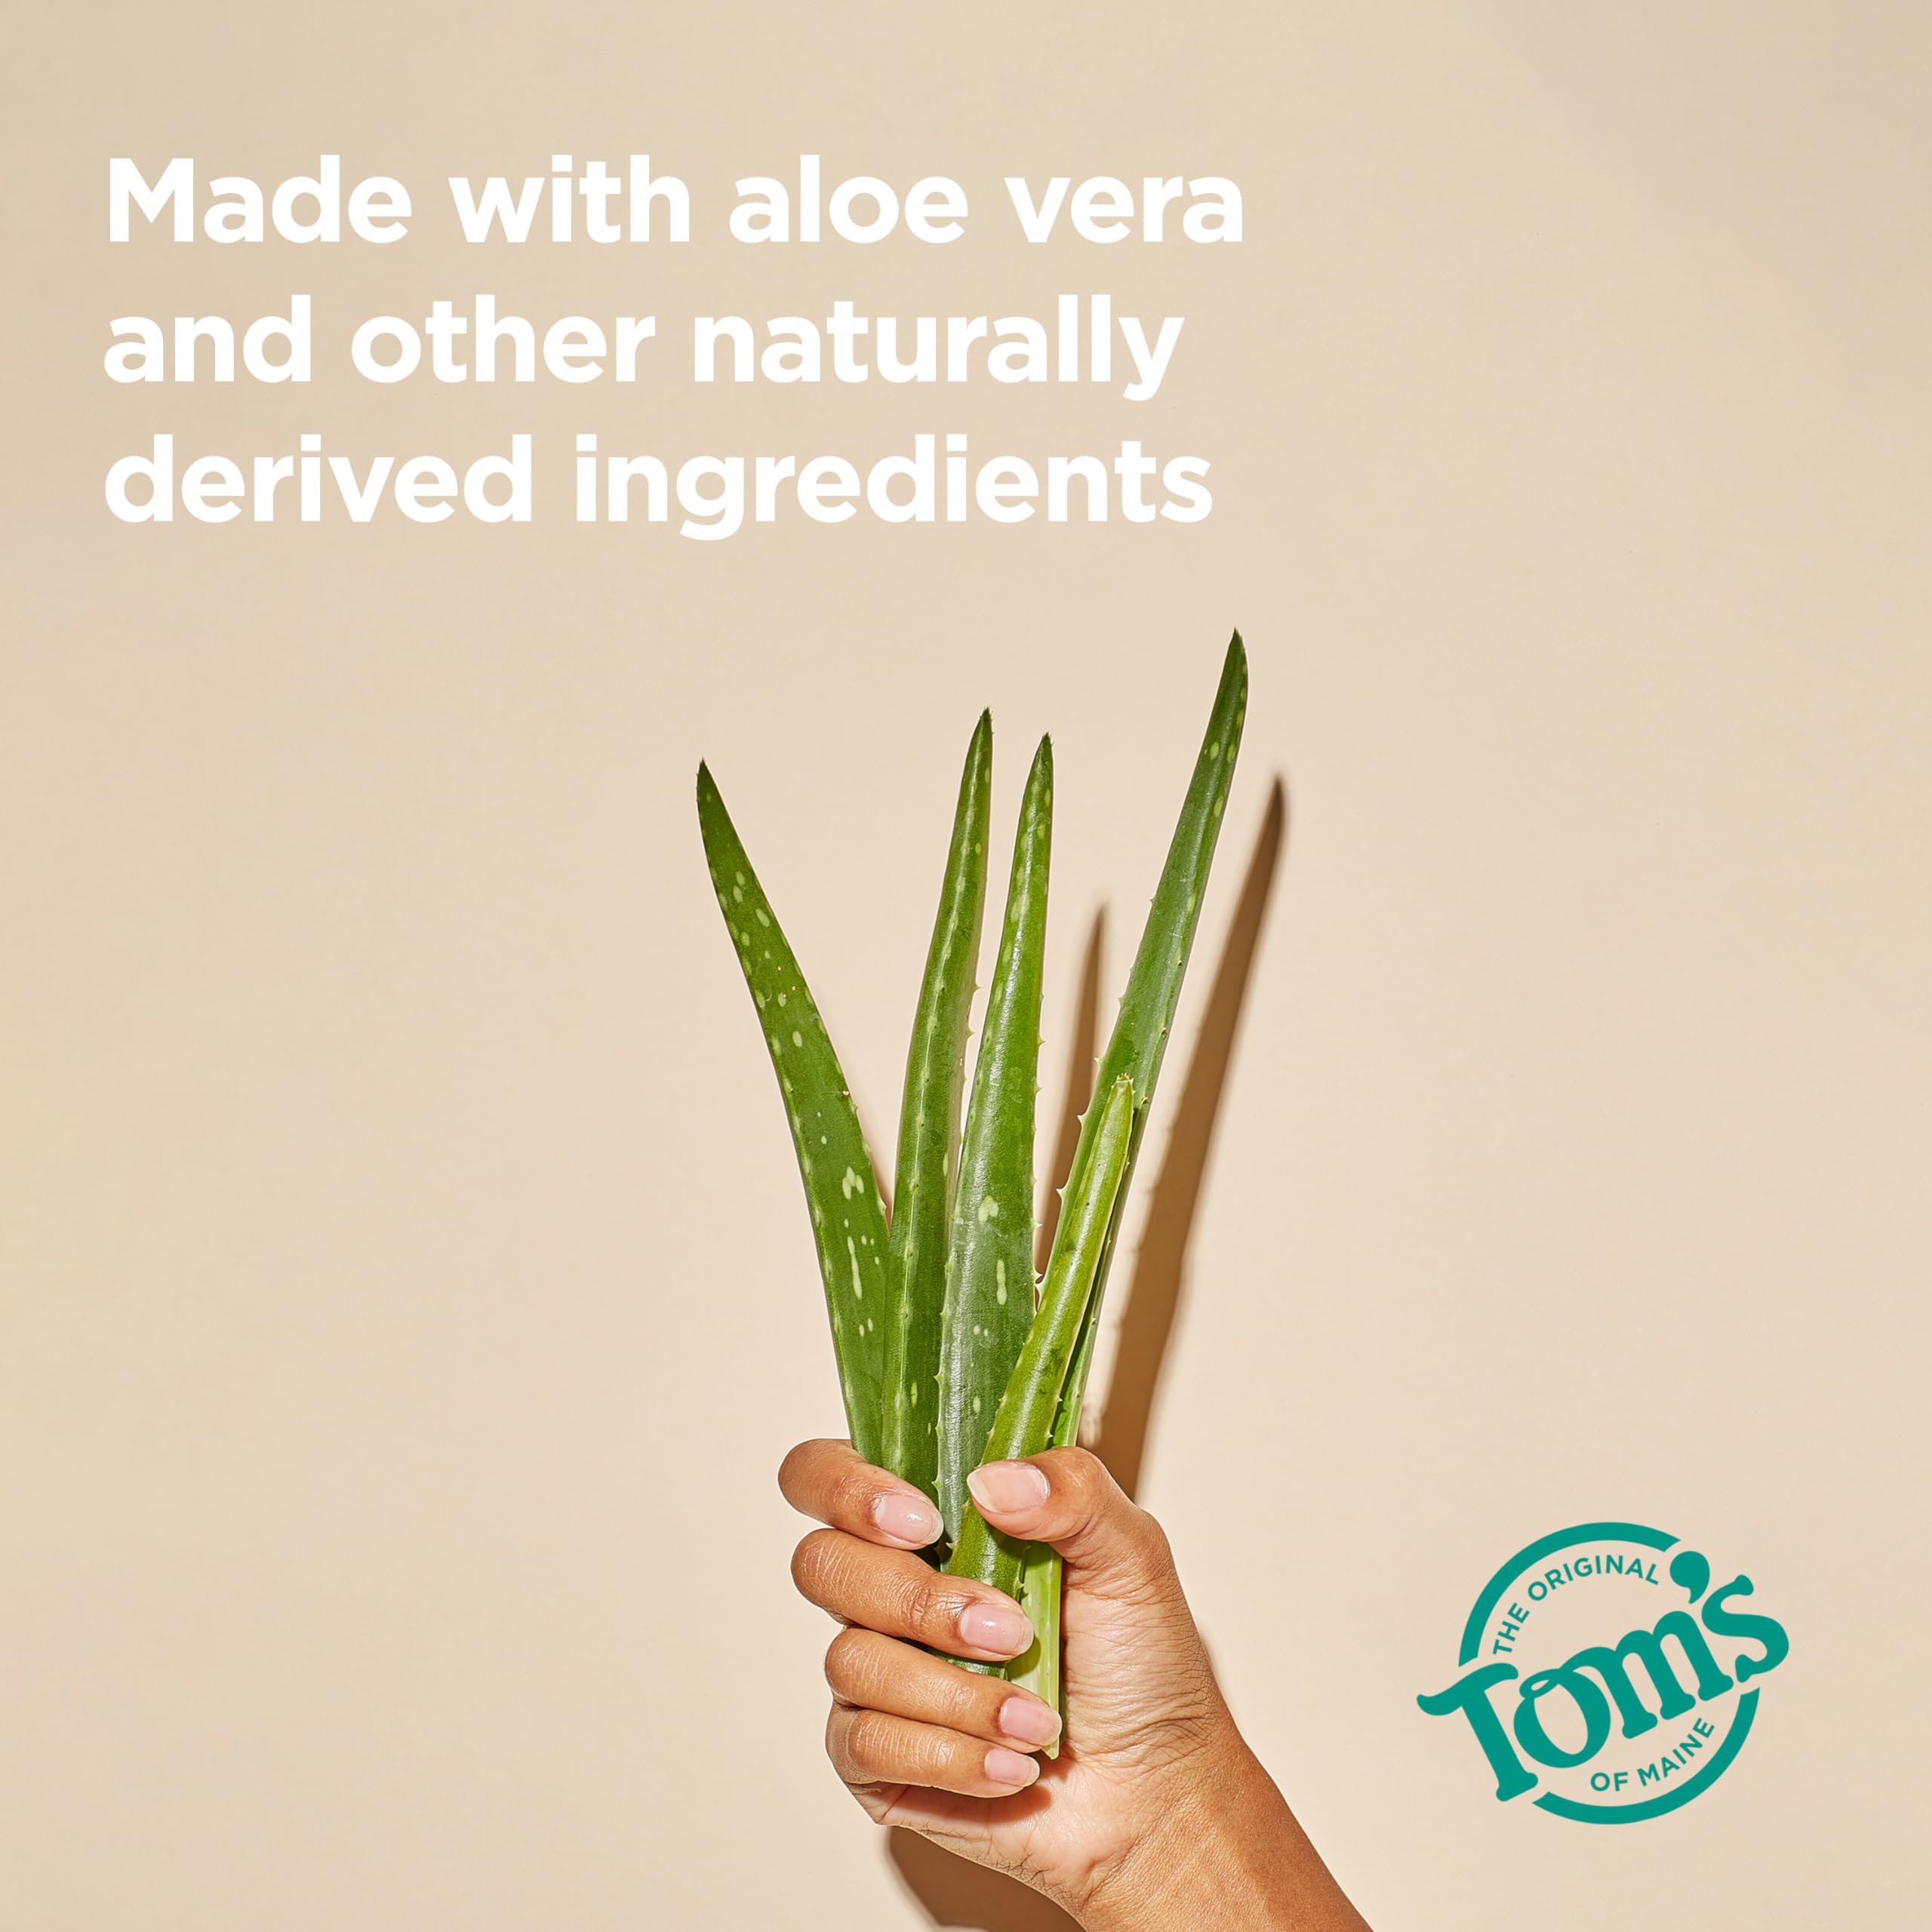 Tom’s of Maine Cucumber Aloe Natural Deodorant for Women and Men, Aluminum Free, 3.25 oz